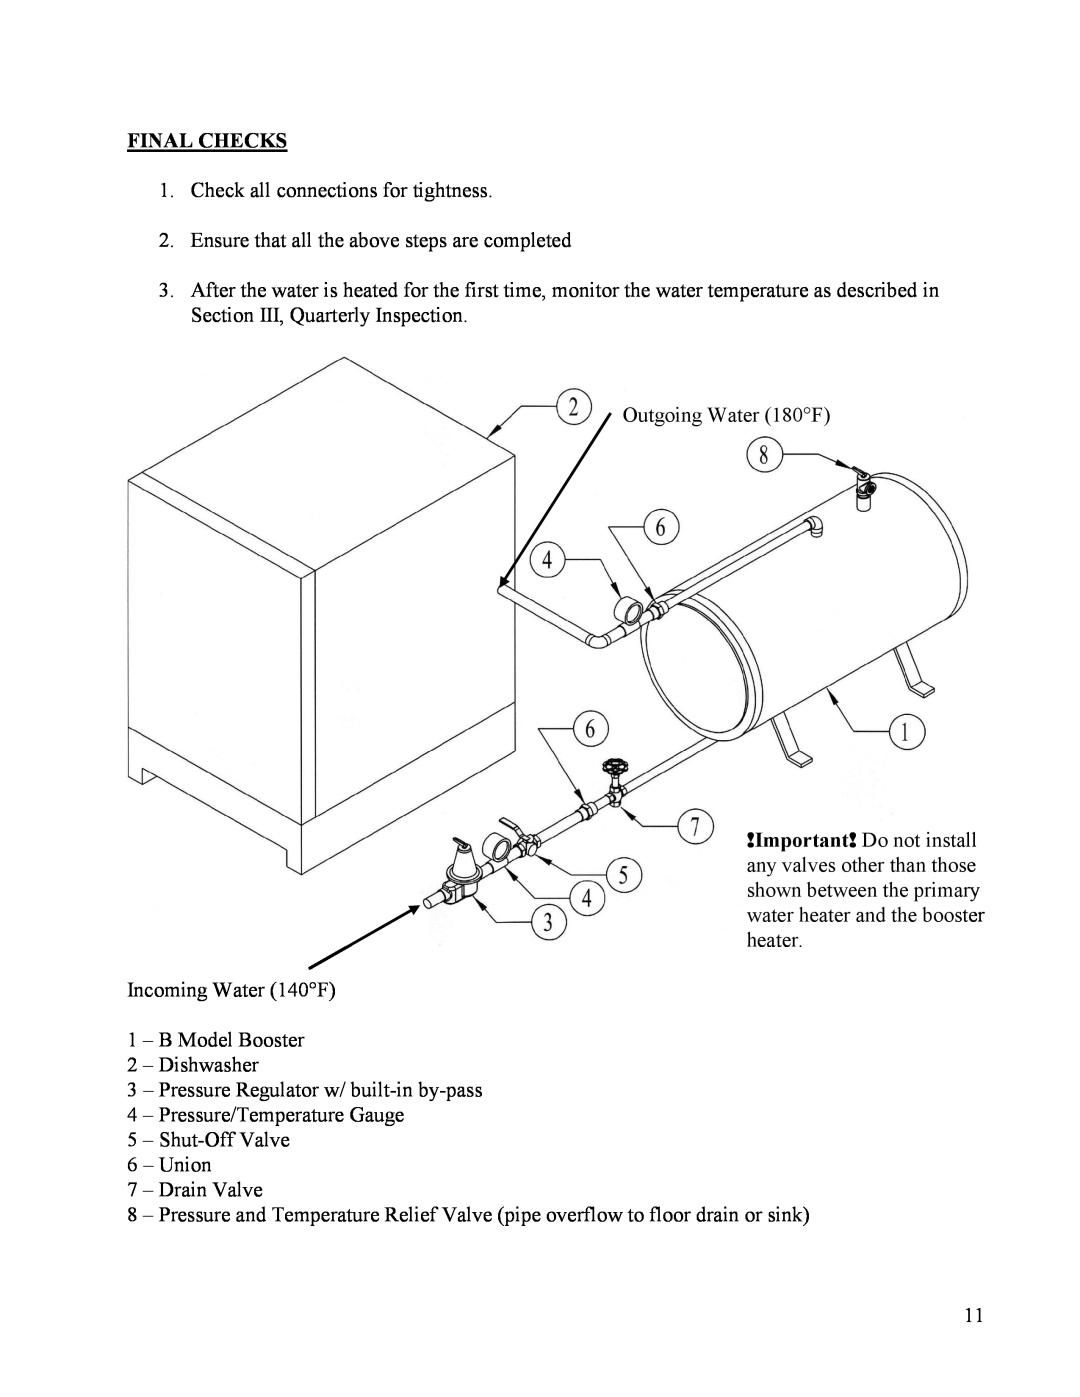 Hubbell Electric Heater Company B manual Final Checks 